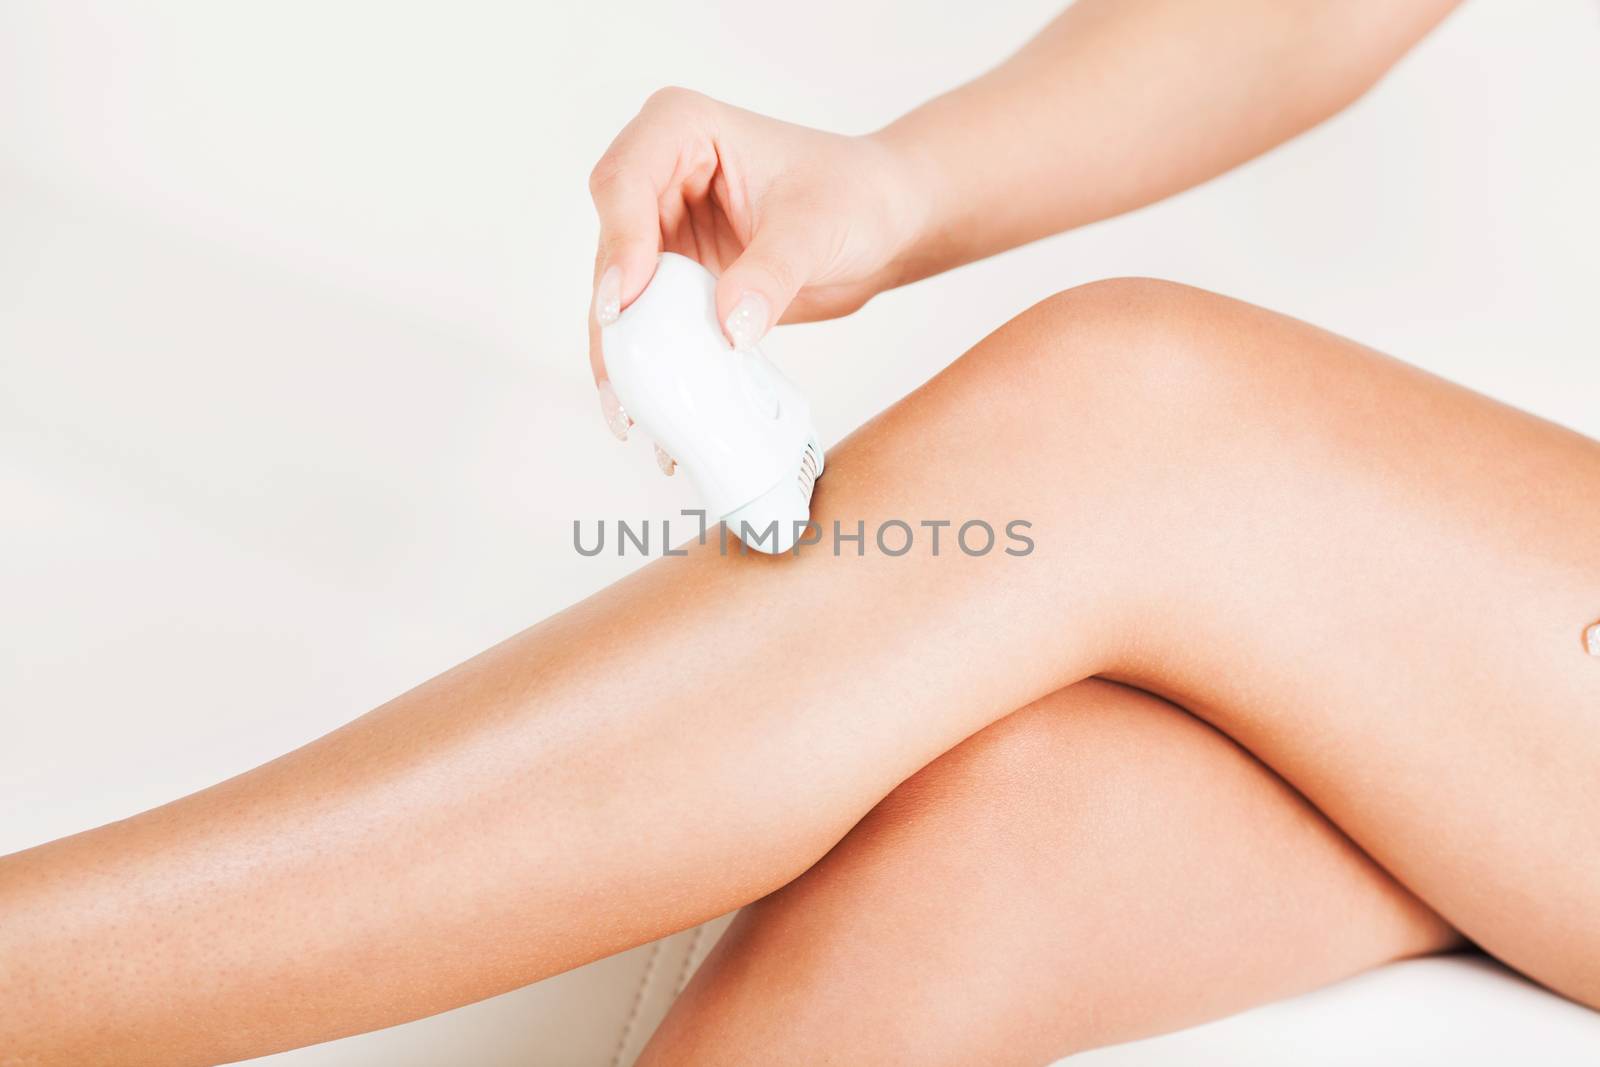 Woman shaving leg with Electric Razor